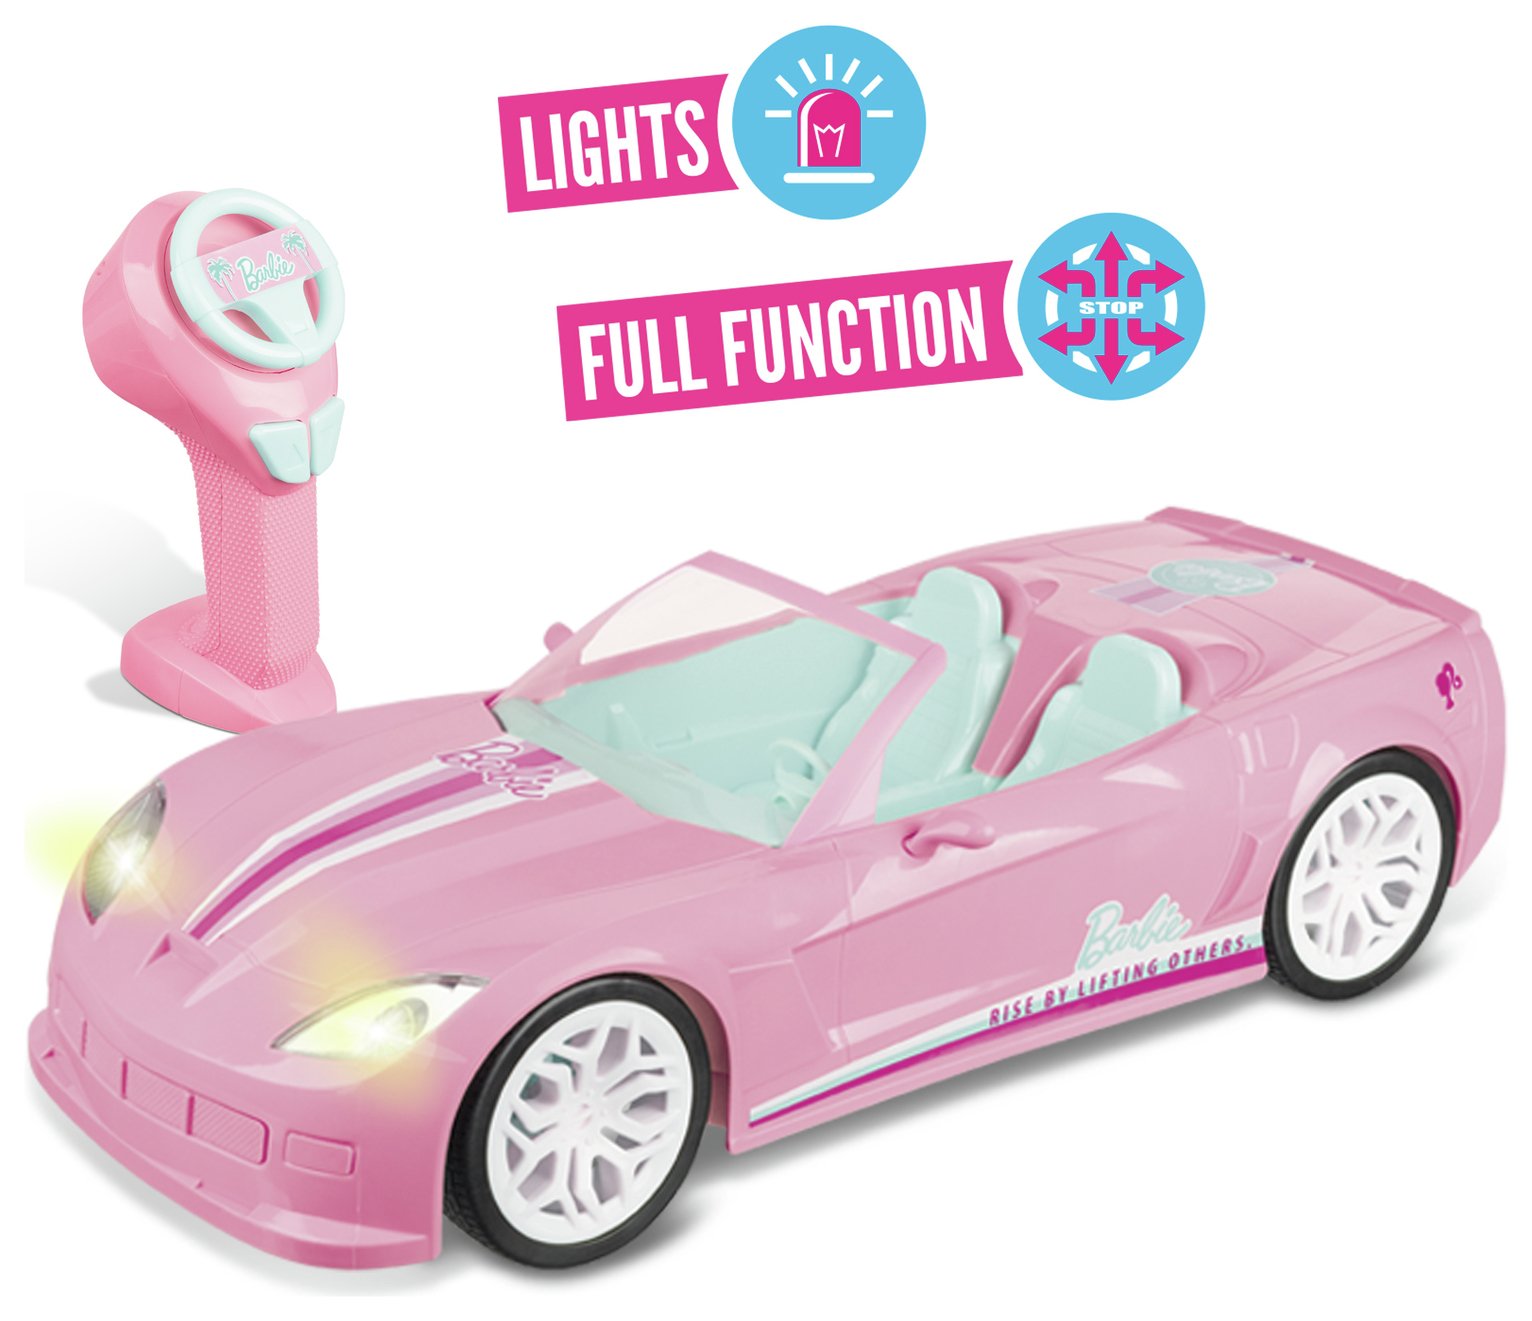 Barbie Limited Edition RC Dream Car